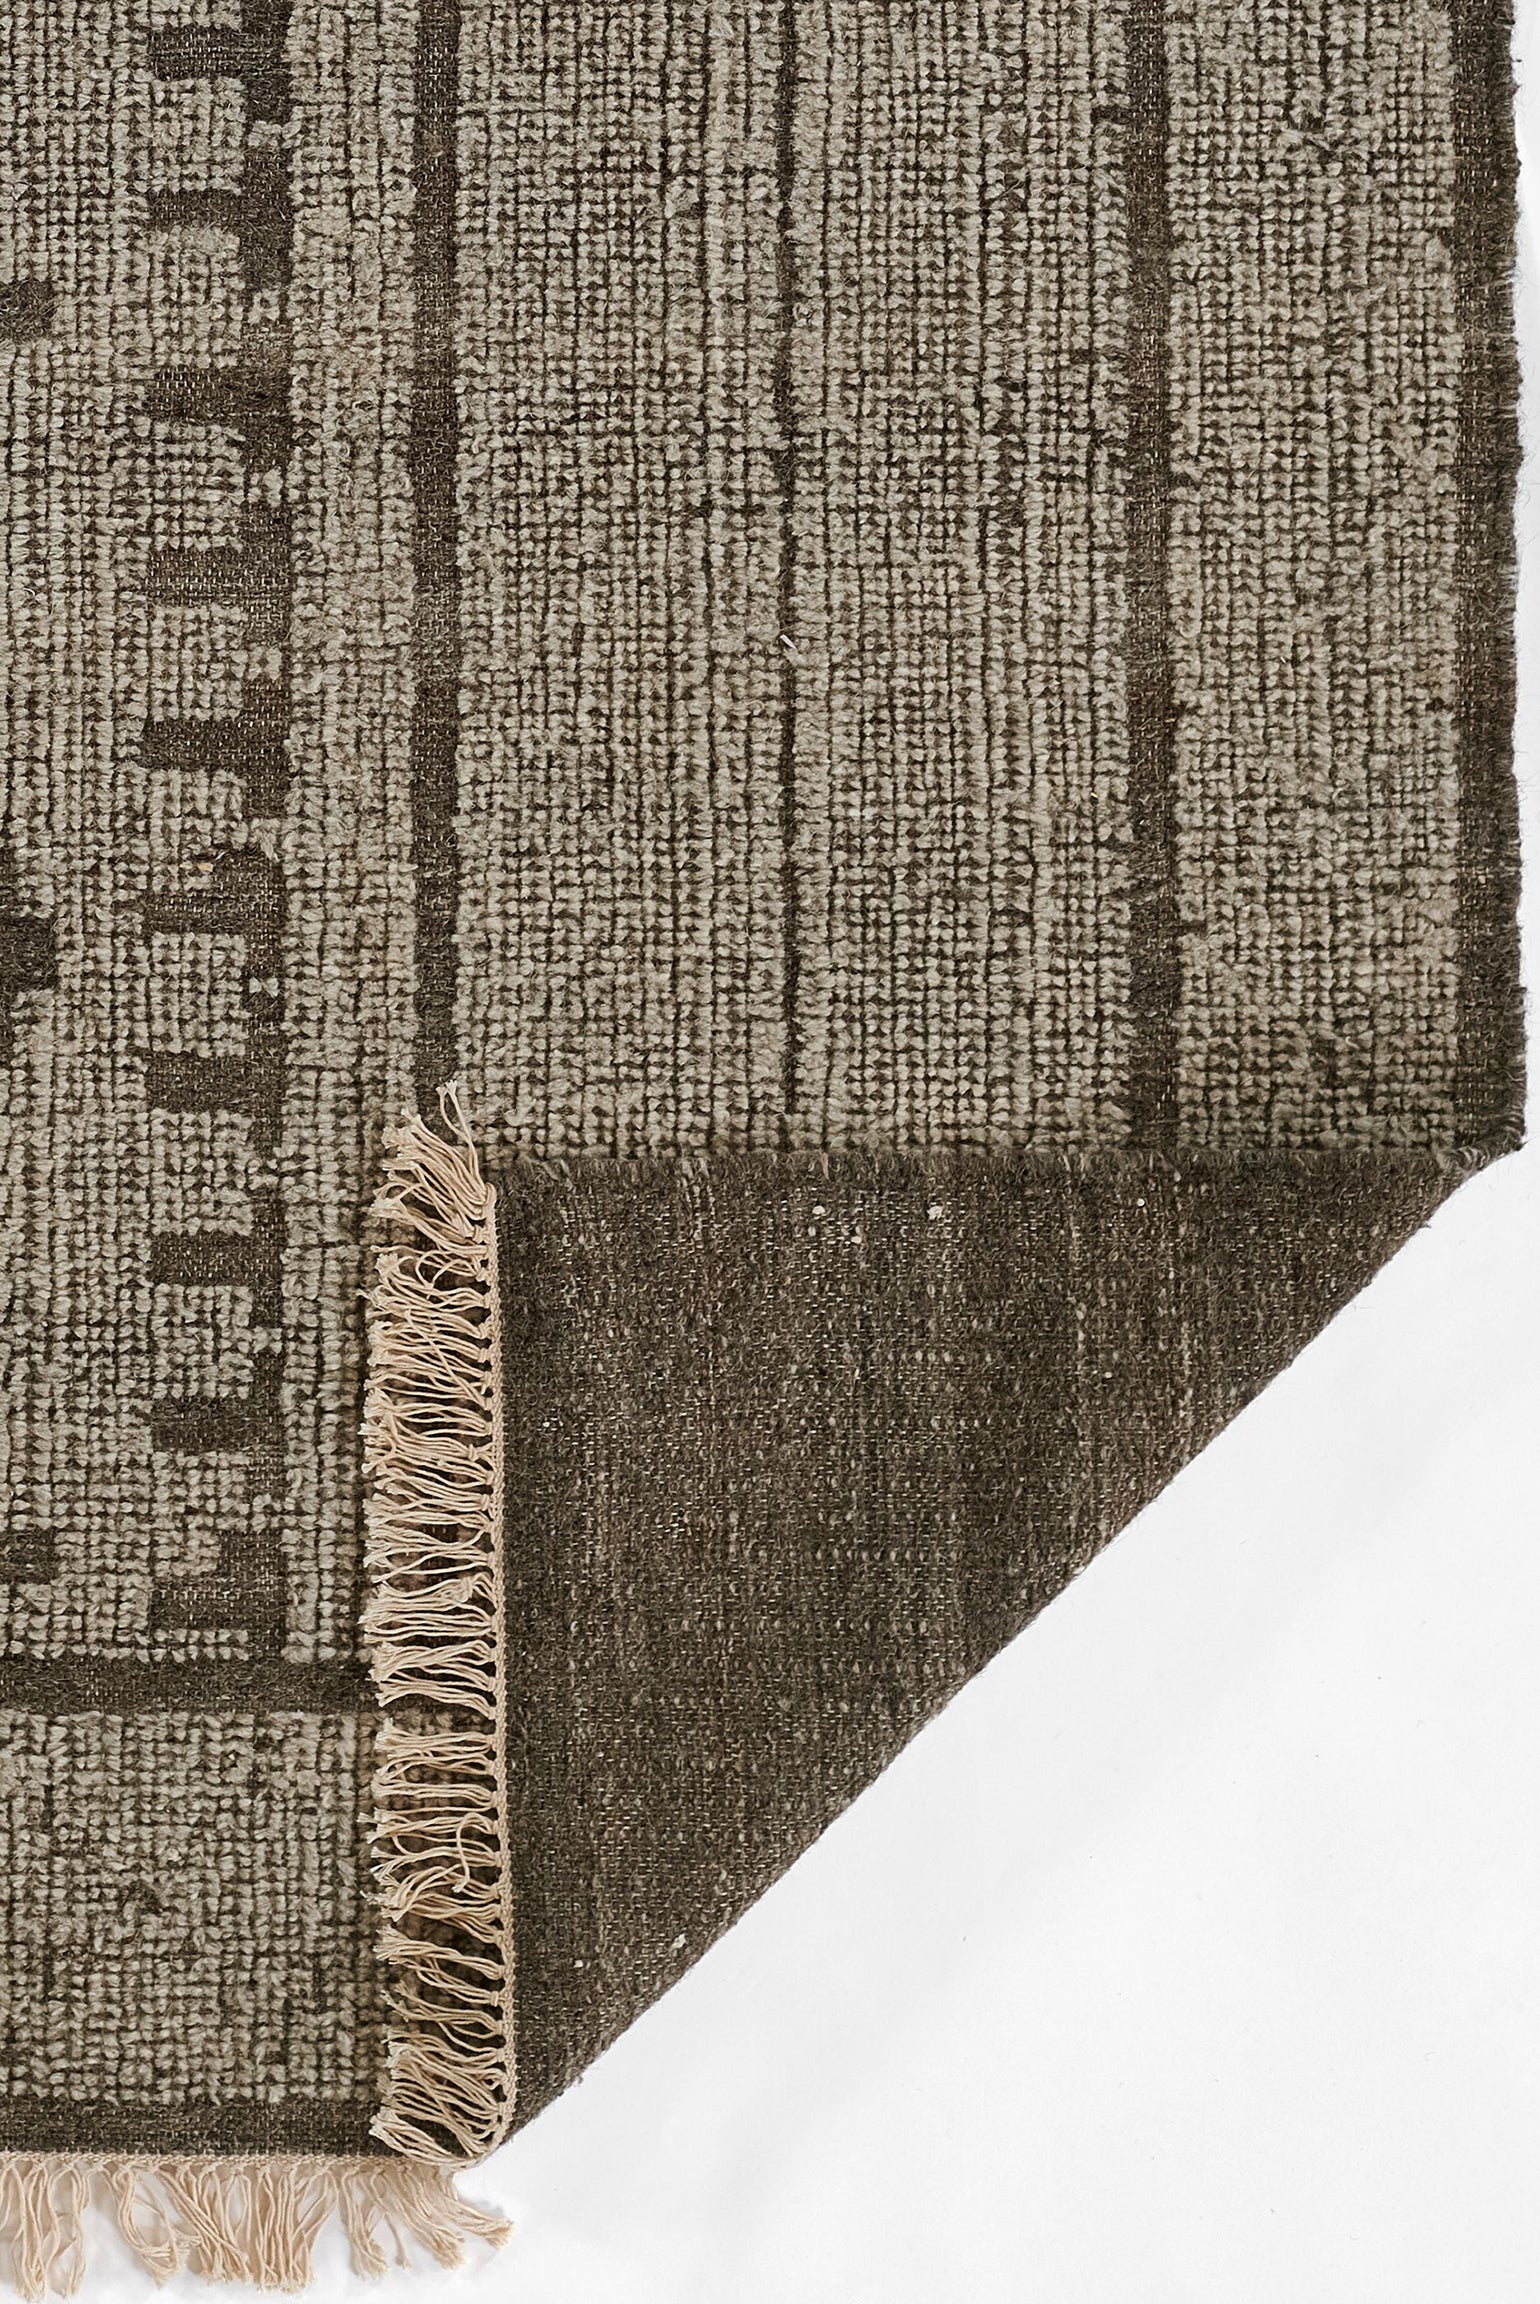 Boho Hand Woven Wool & Cotton Natural Tone Area Rug